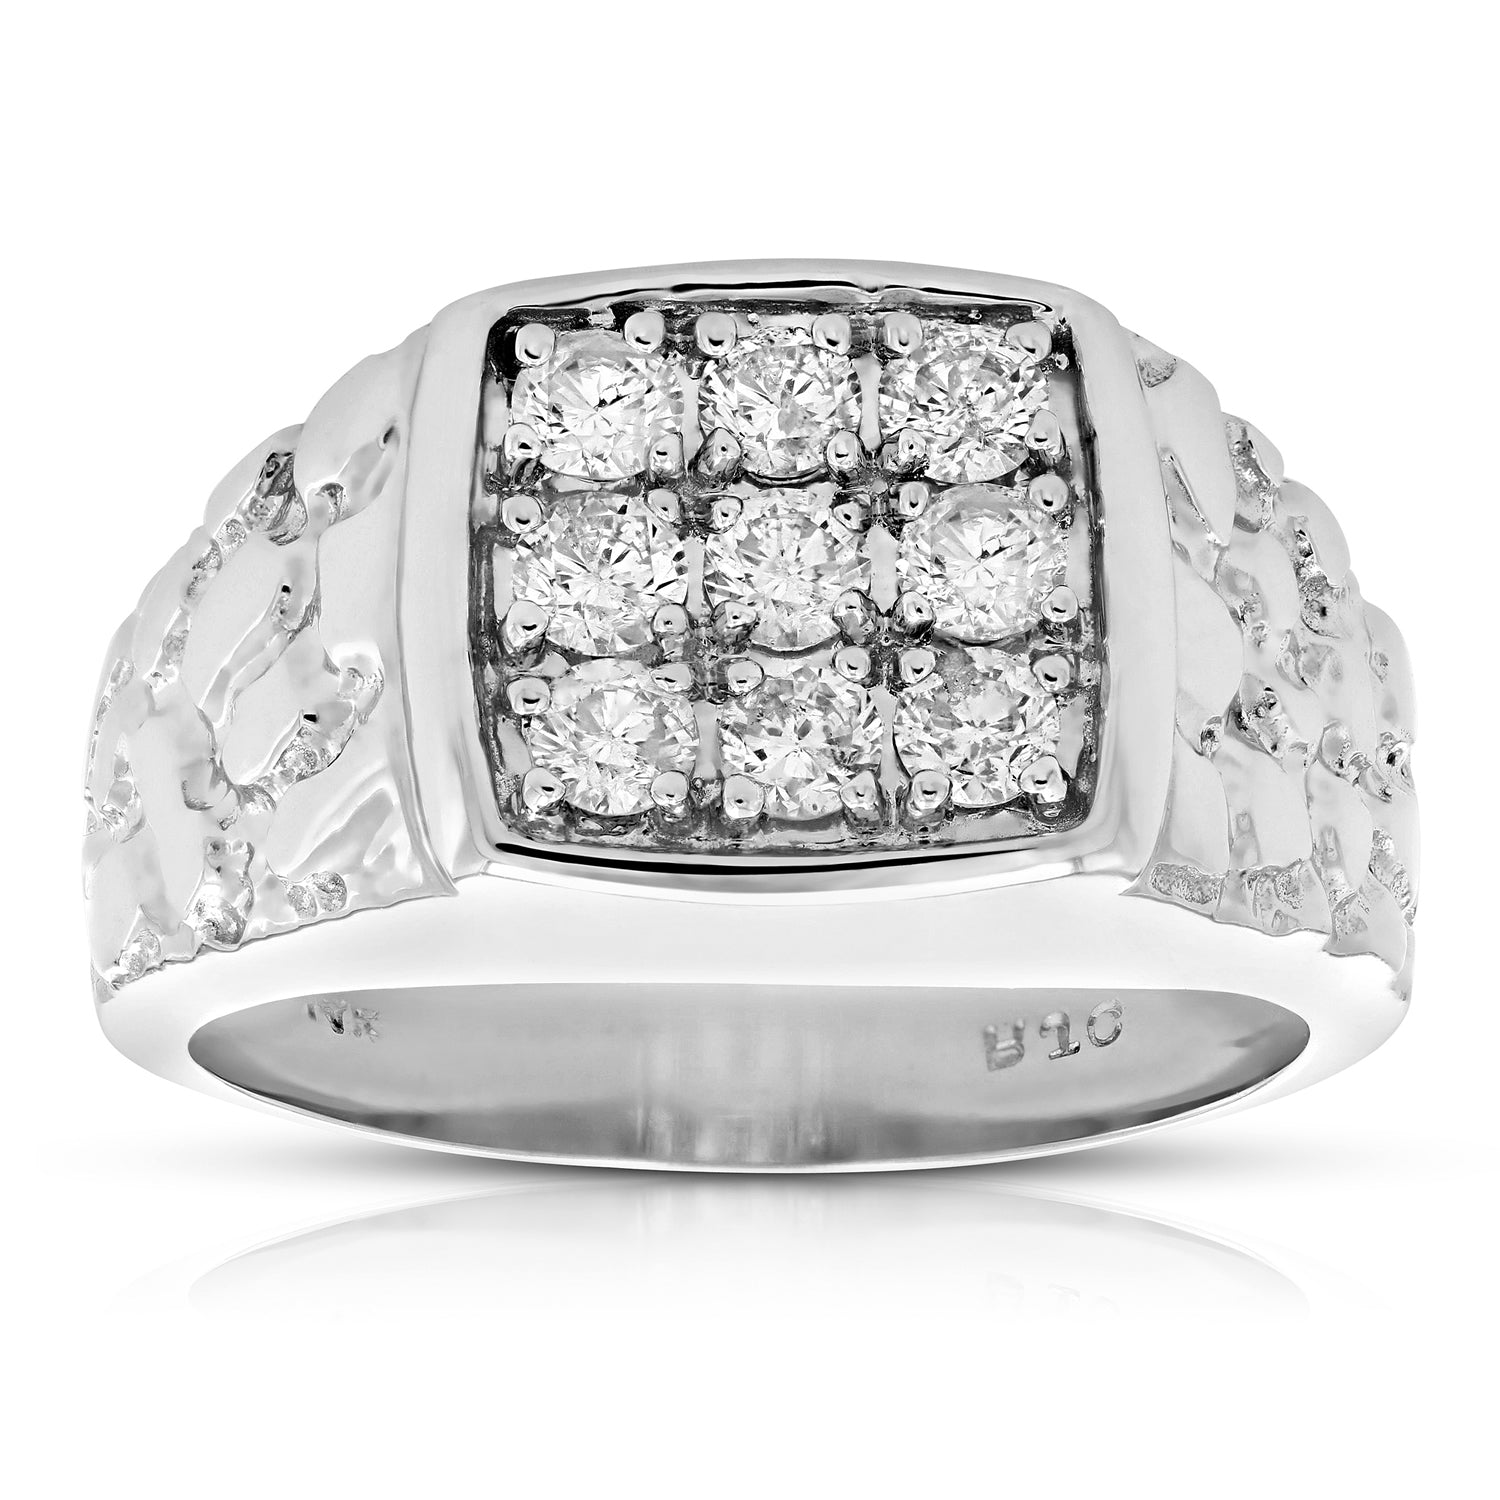 1 cttw Men's Diamond Ring 14K White Gold Wedding Engagement Bridal Style Size 10